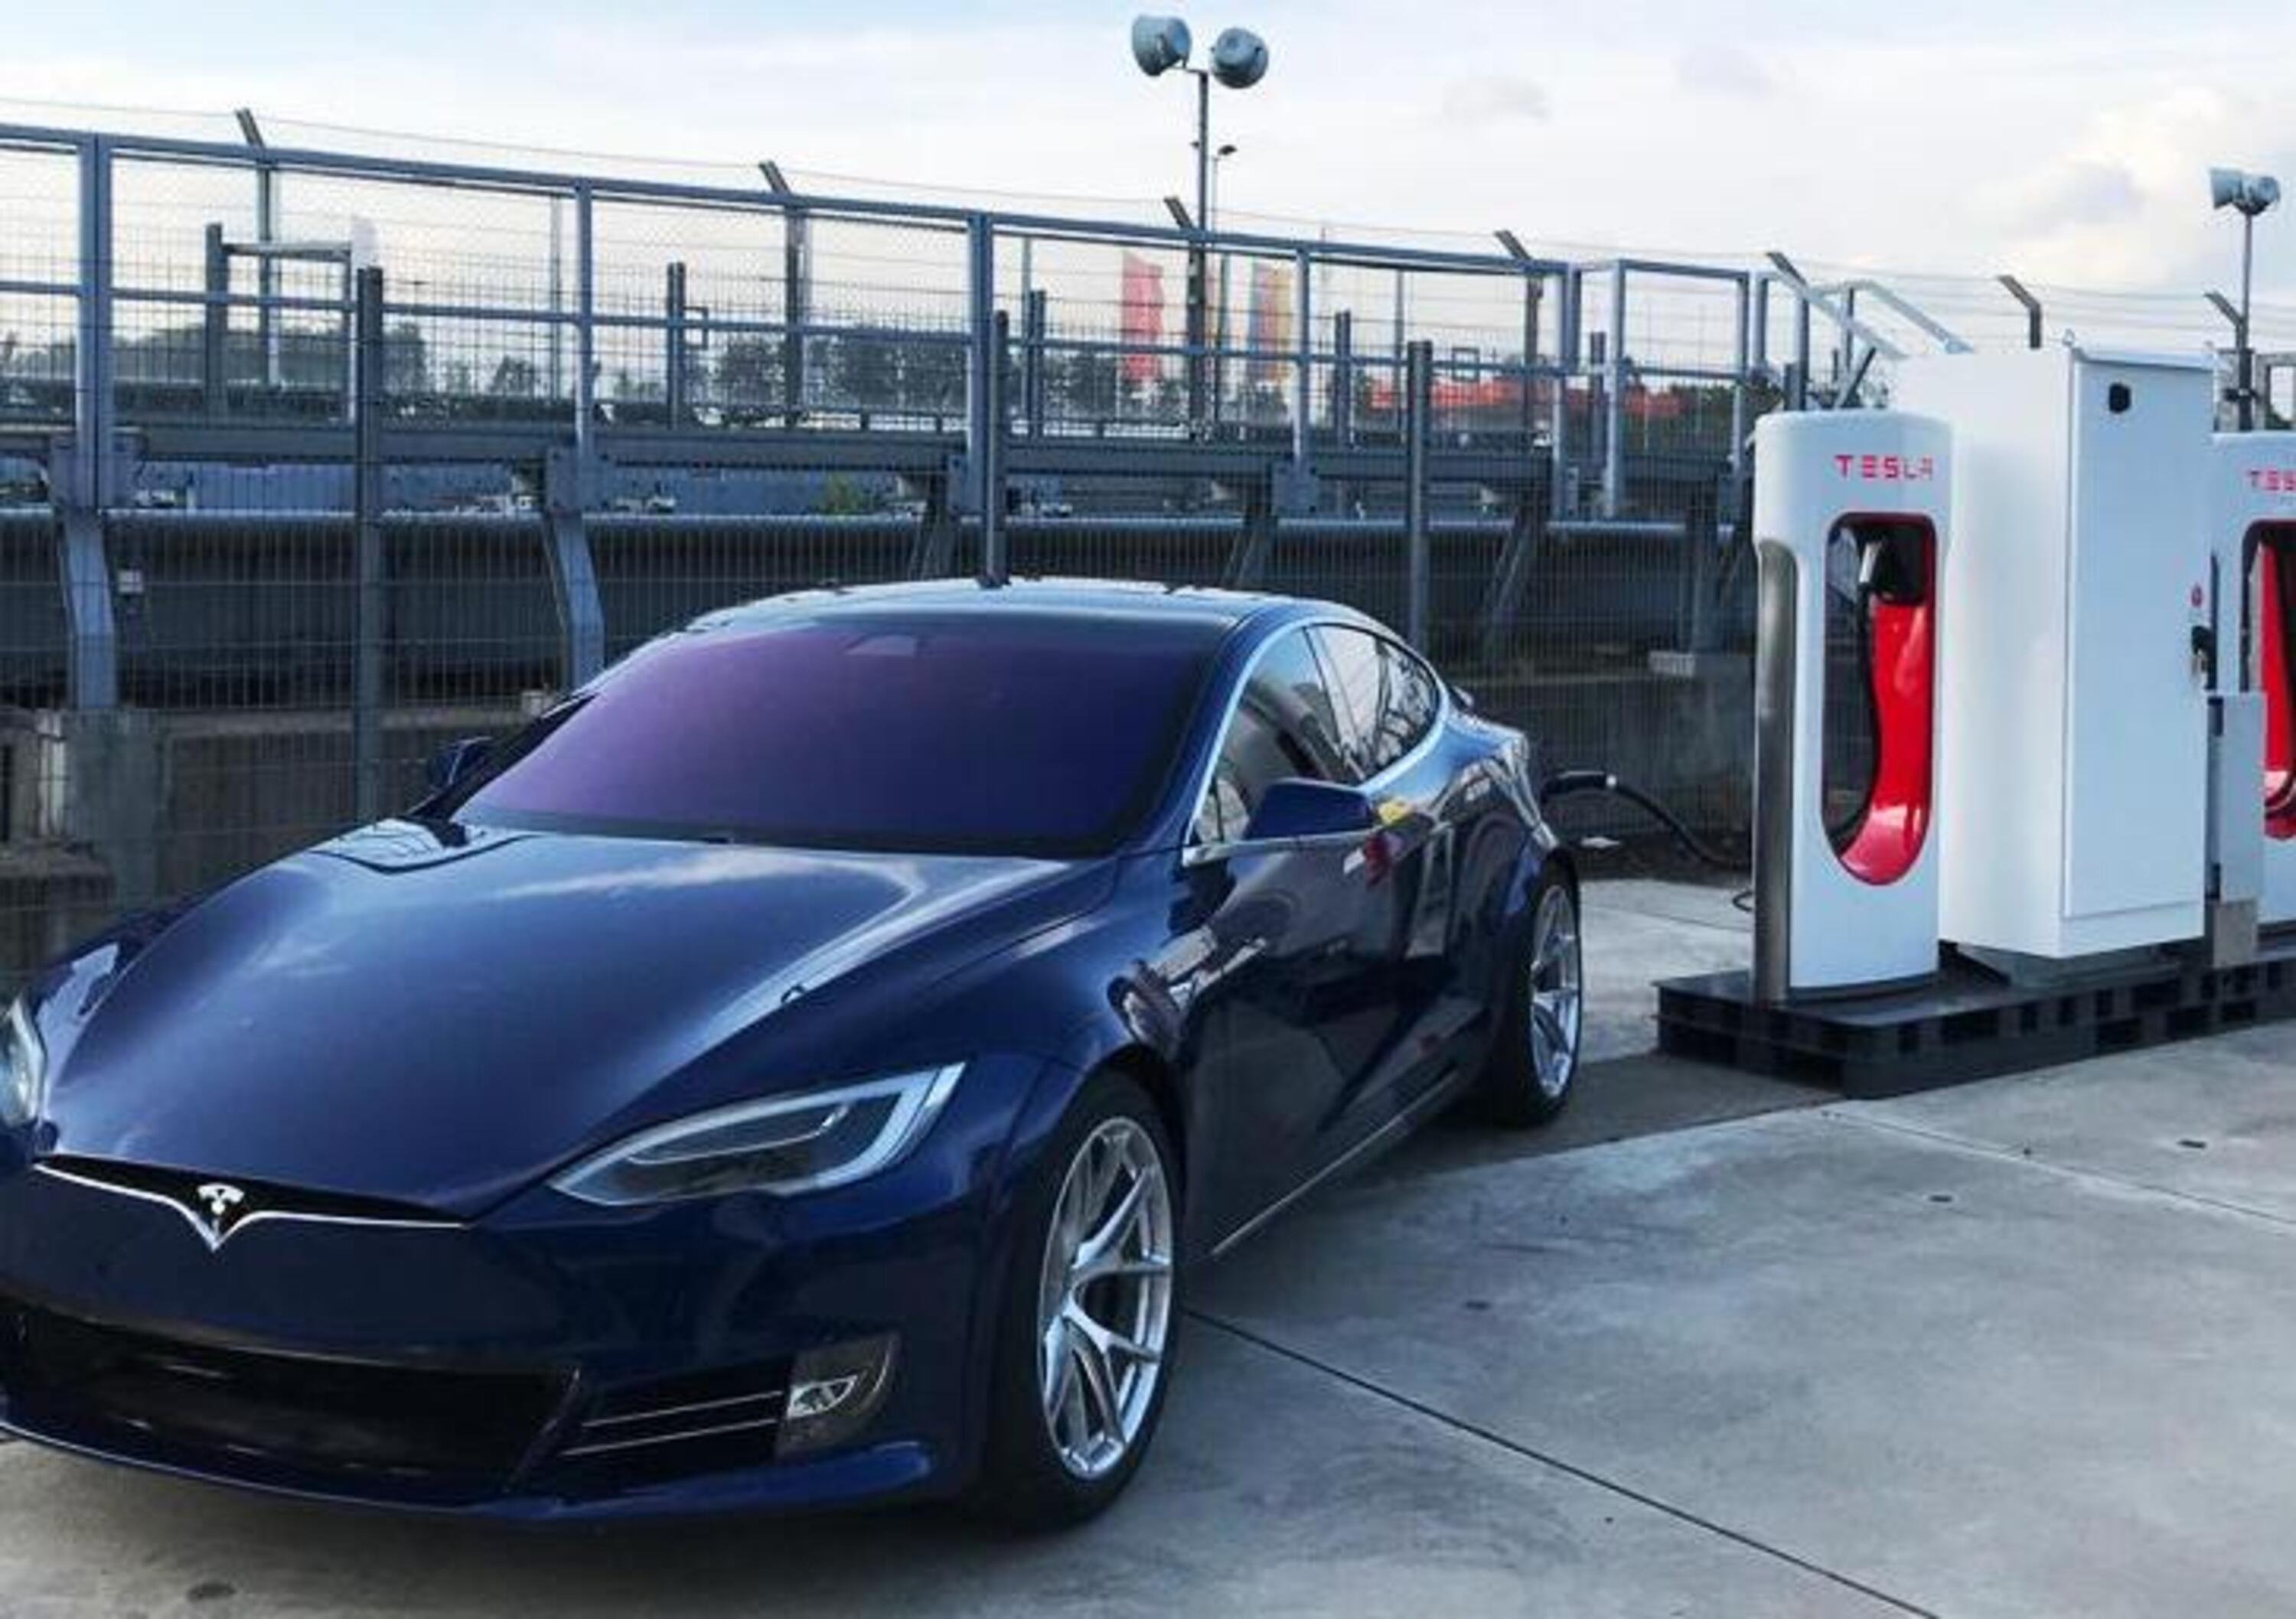 Tesla annuncia nuova mega-fabbrica di supercharger in Cina